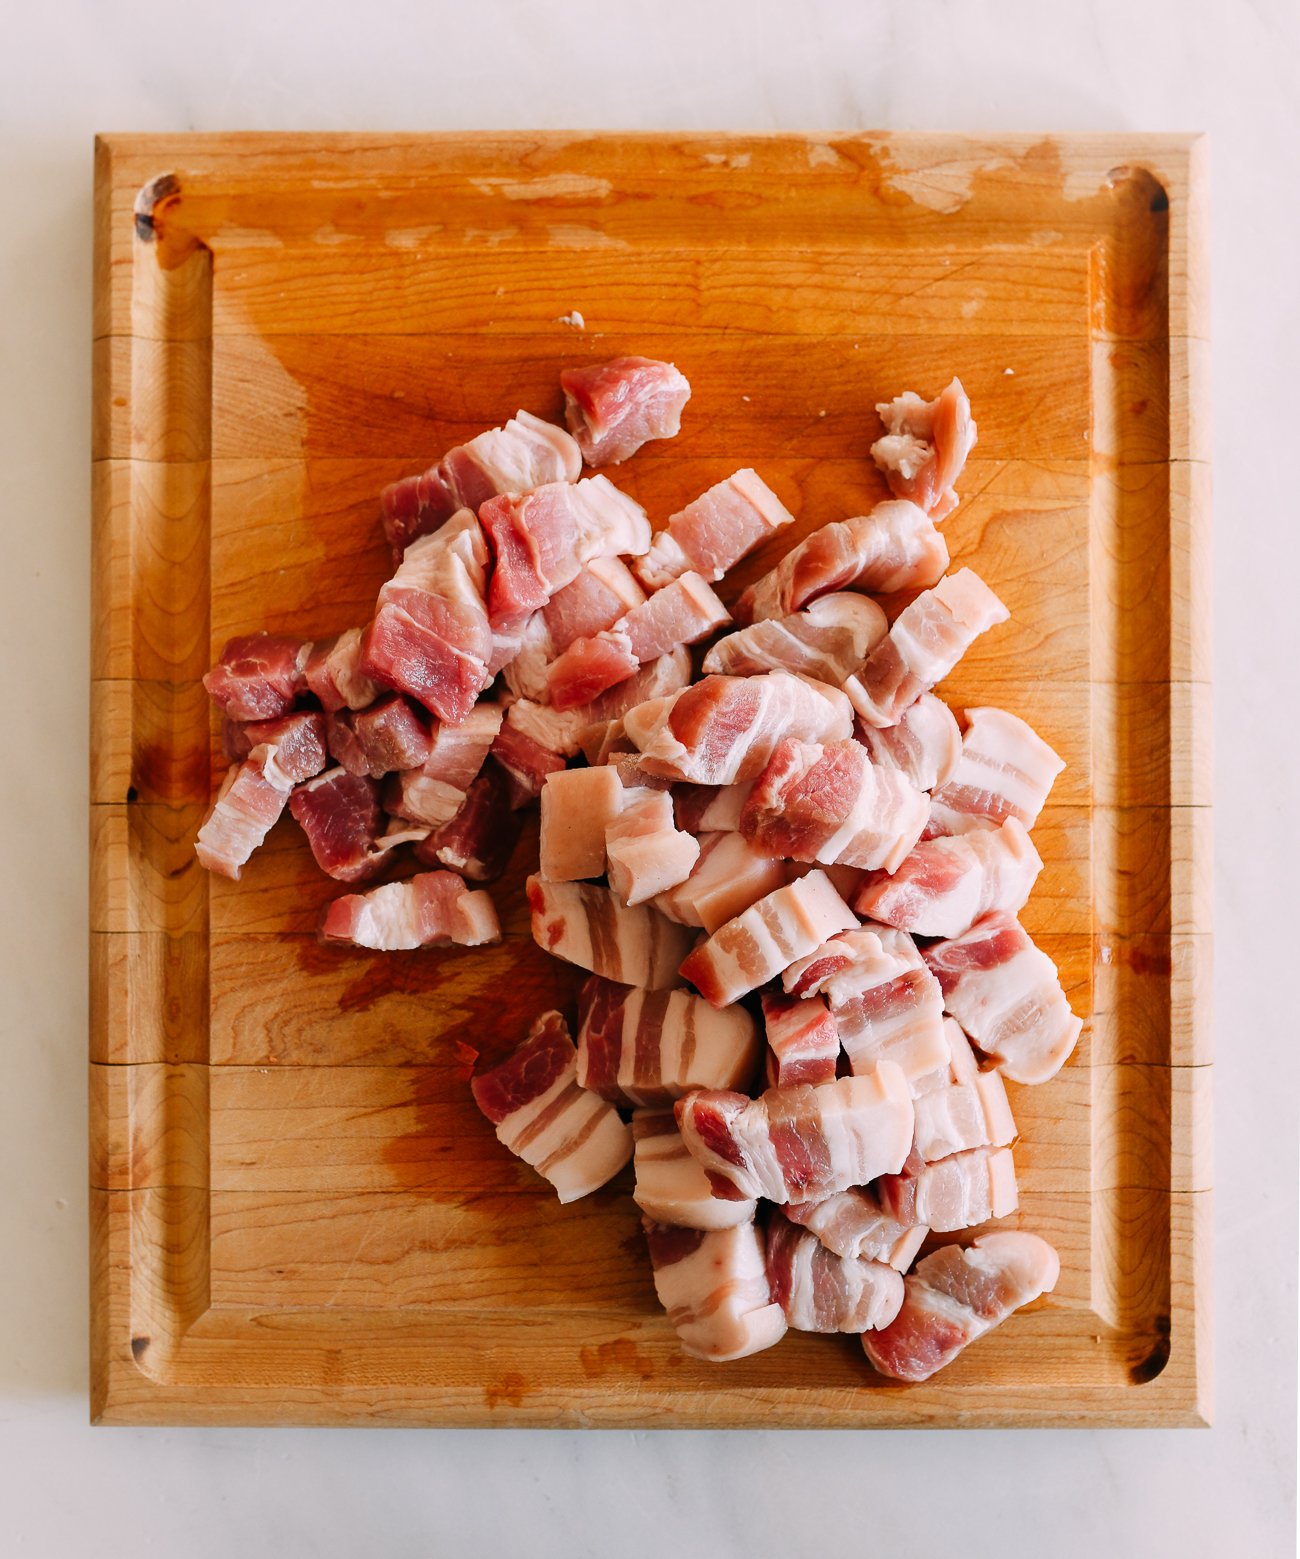 pork belly cut into pieces on a cutting board